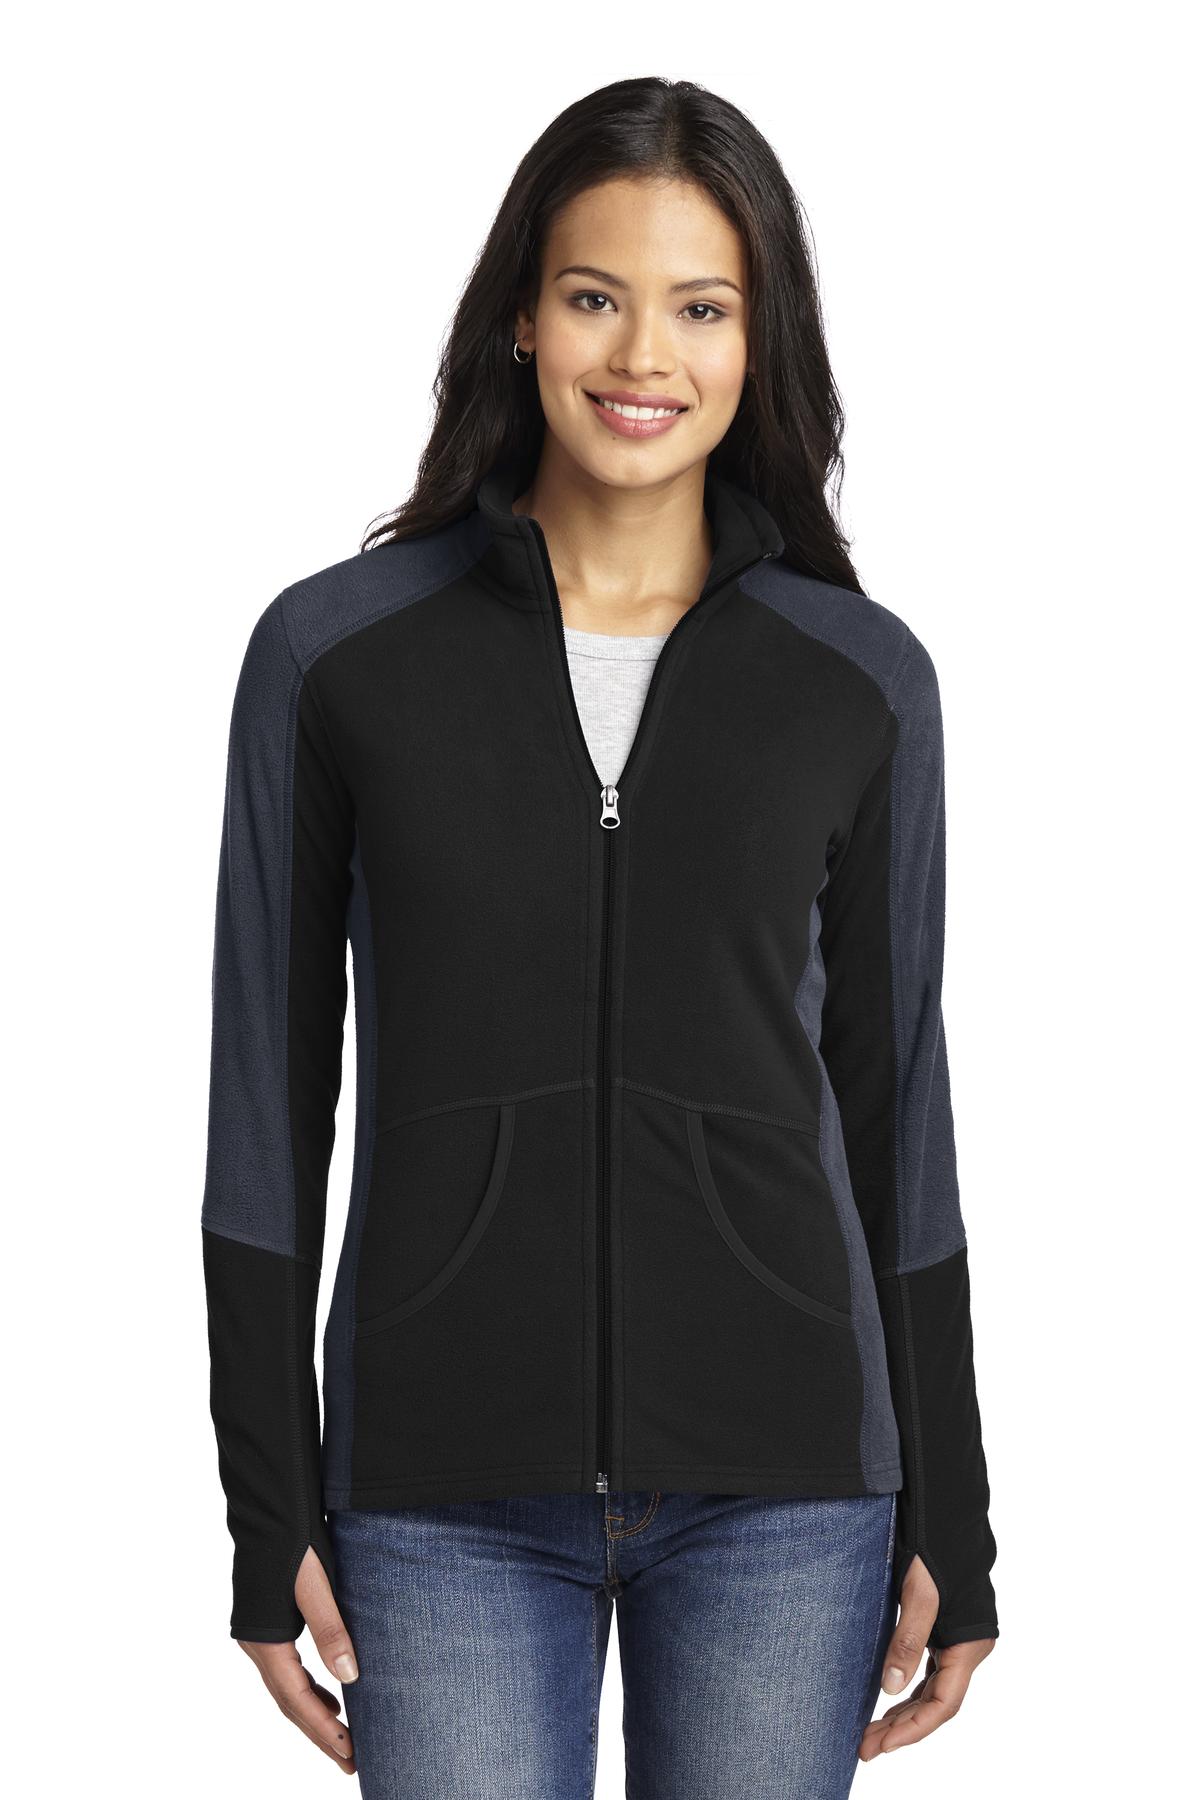 Port Authority Ladies Outerwear Sweatshirts & Fleece for Hospitality ® Ladies Colorblock Microfleece Jacket.-Port Authority